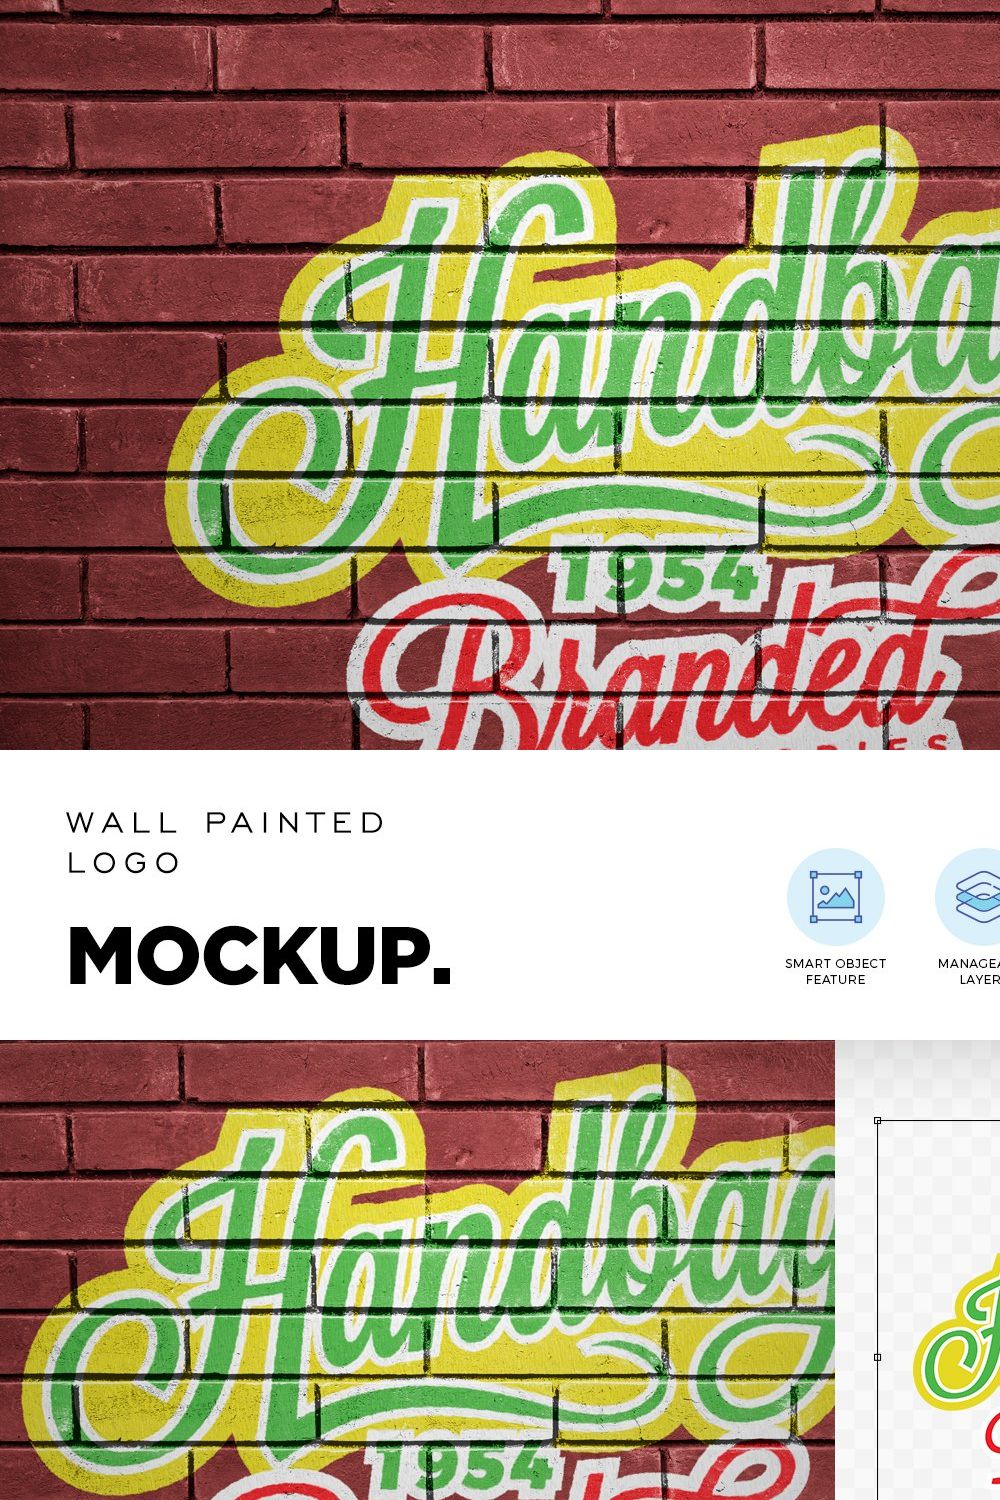 Bricks Wall Painted Logo Mockup pinterest preview image.